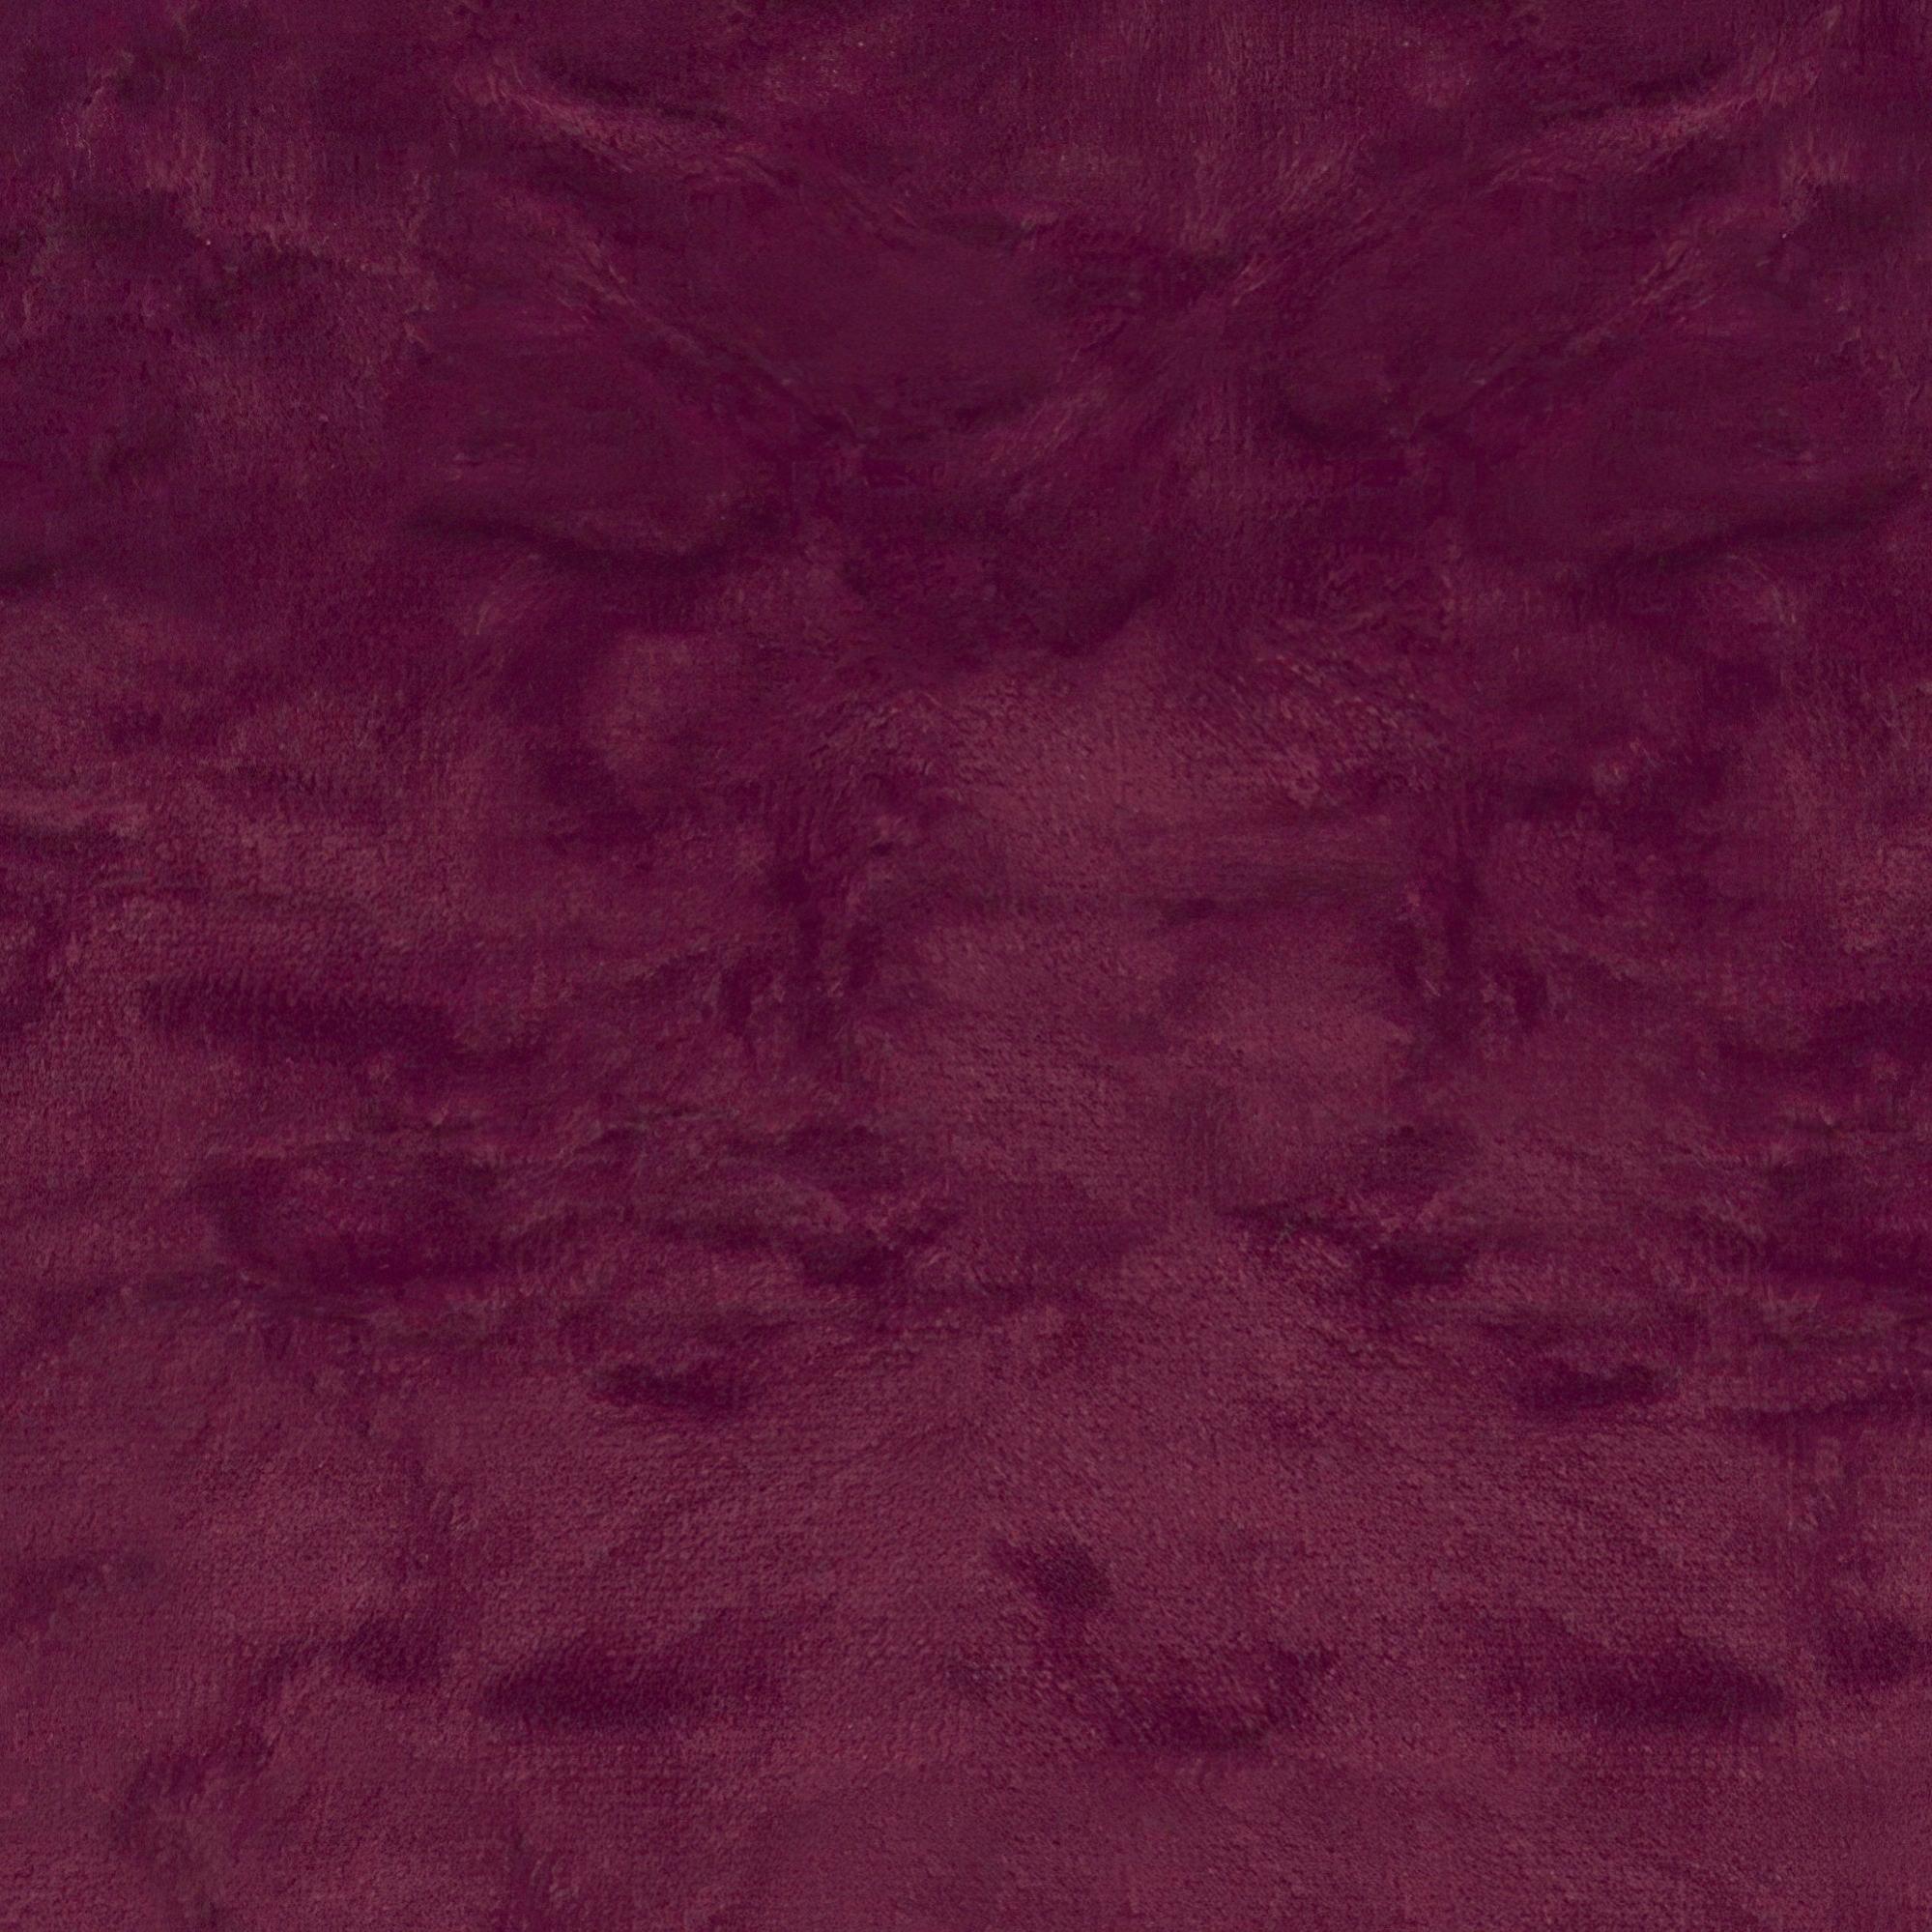 Tela al corte tapicería terciopelo wrinkle rojo ancho 140 cm